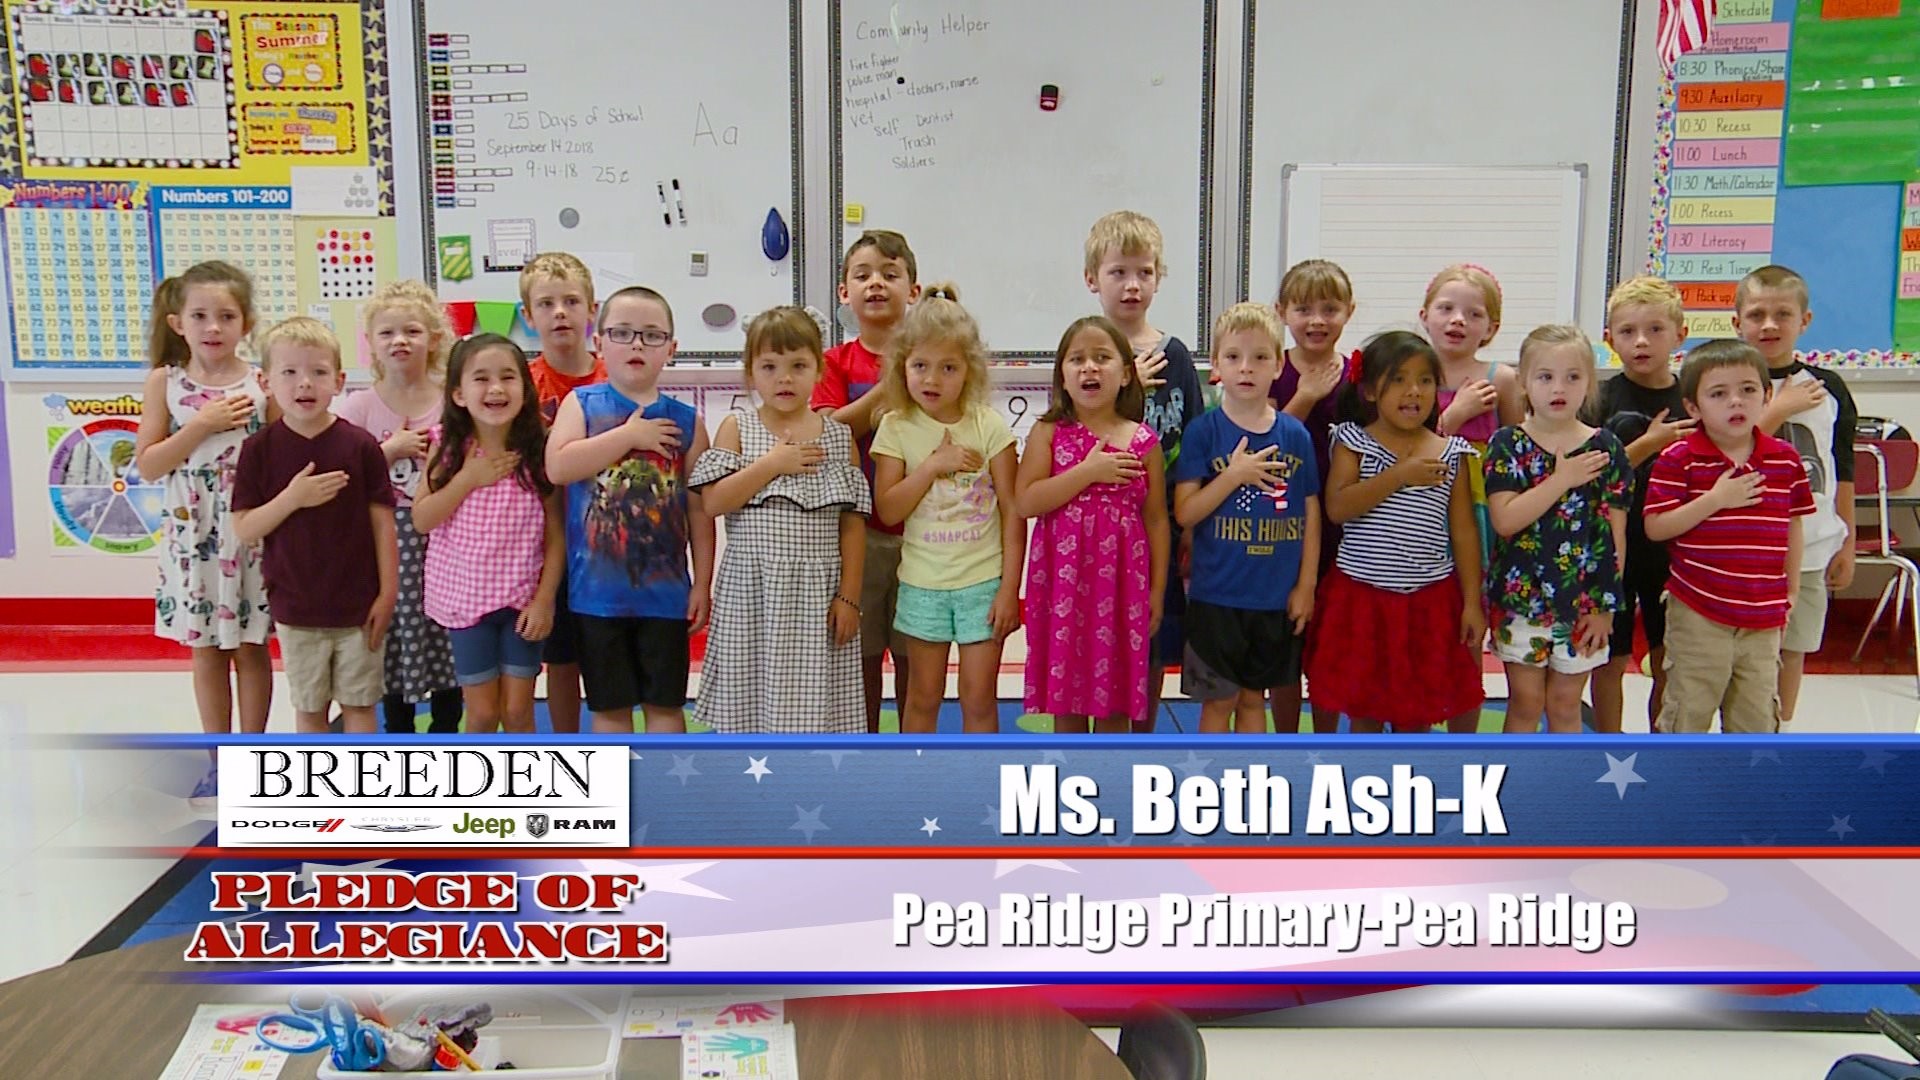 Ms. Beth Ash  K Pea Ridge Primary, Pea Ridge